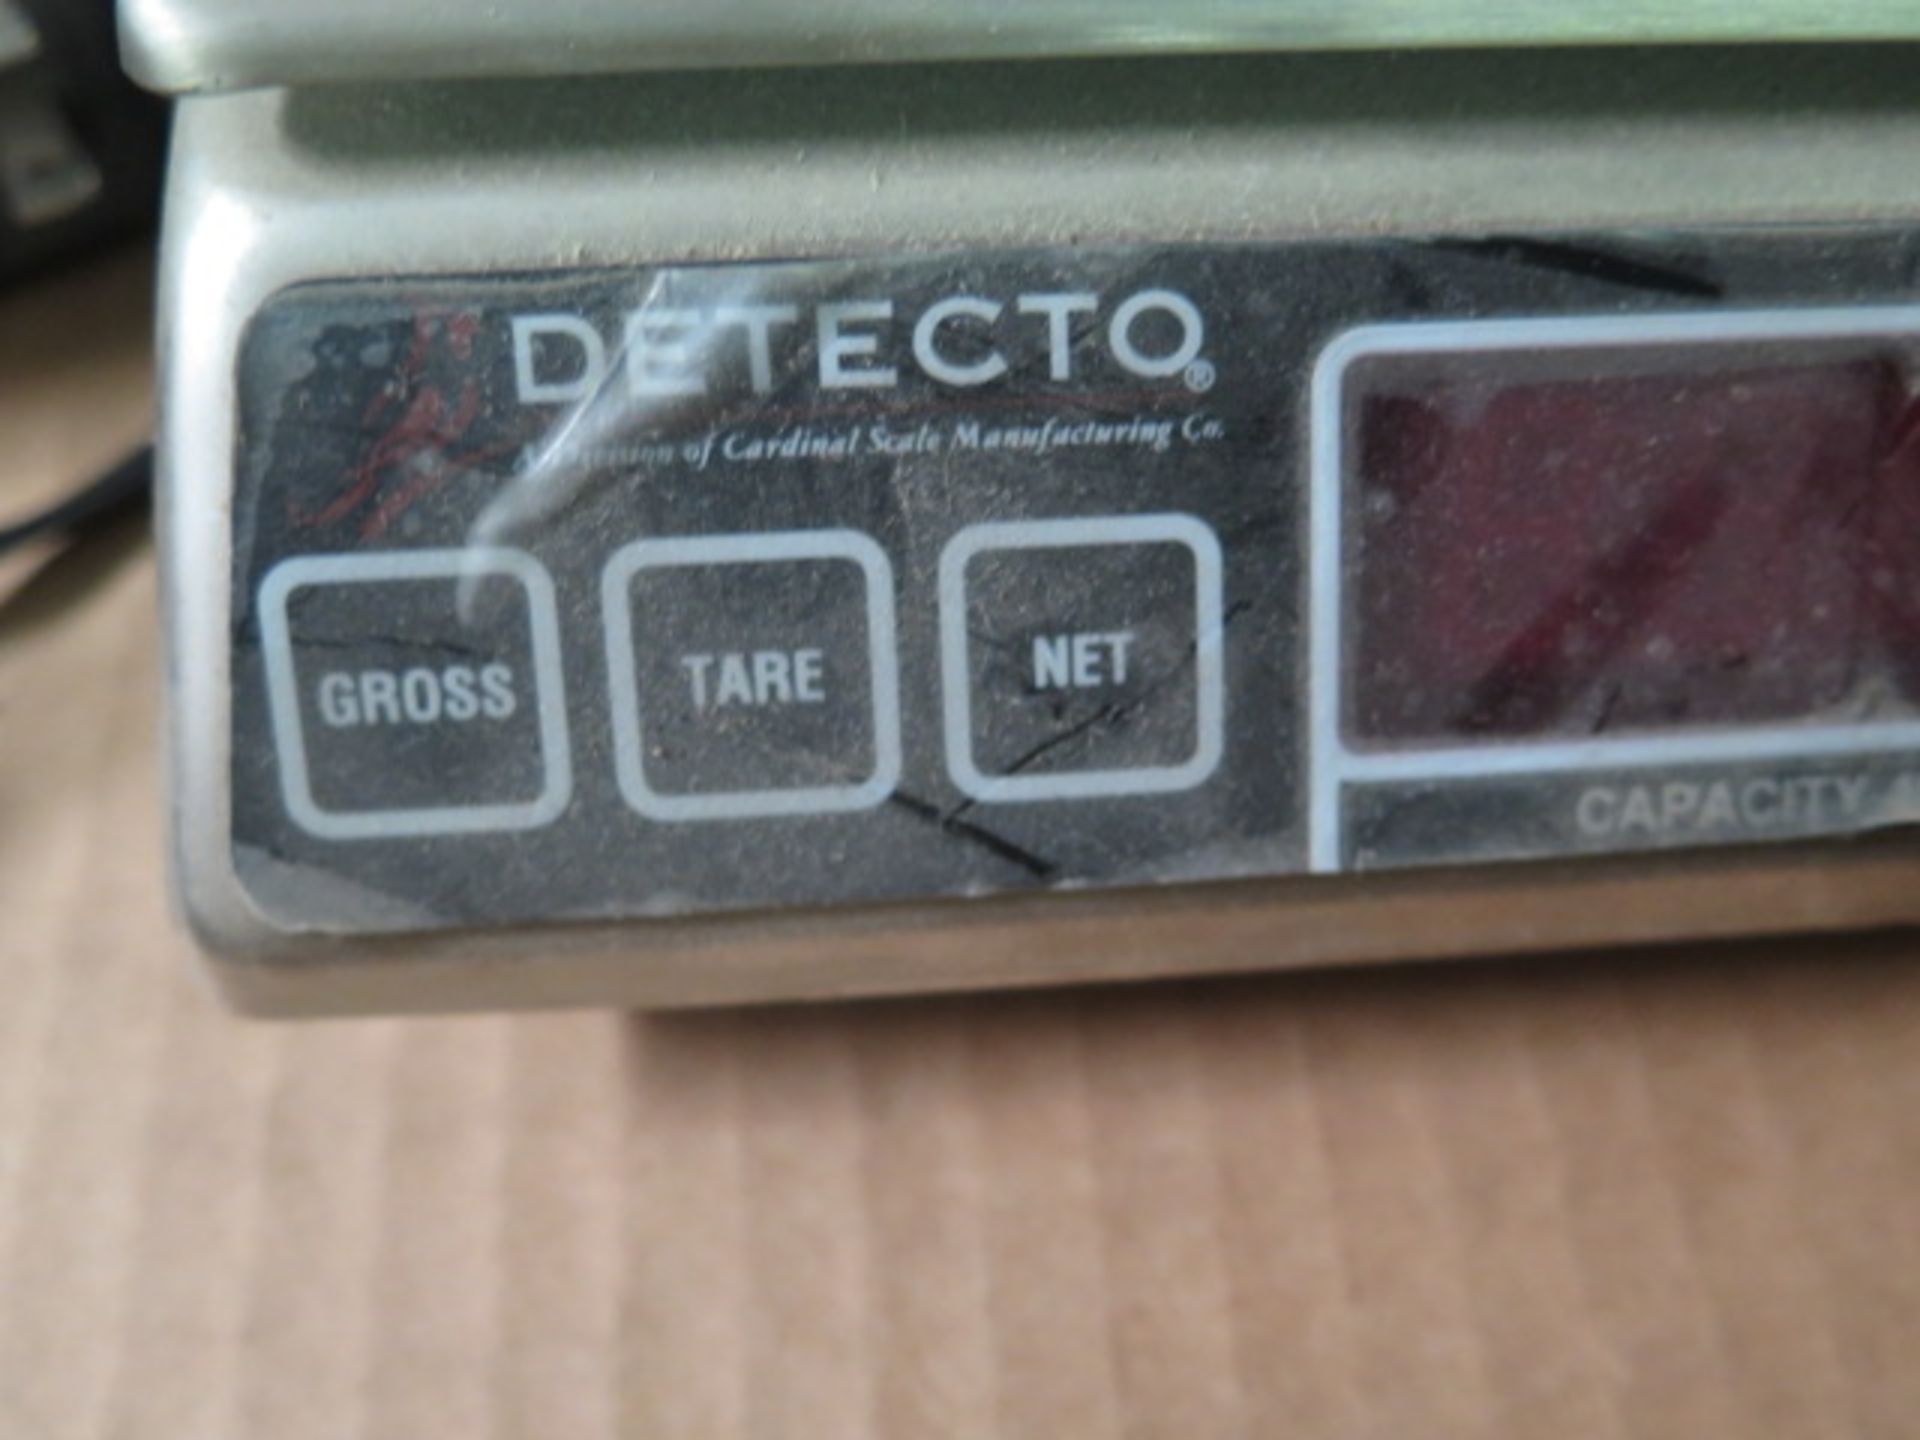 Detecto 4000g Cap Digital Scale (SOLD AS-IS - NO WARRANTY) - Image 4 of 6